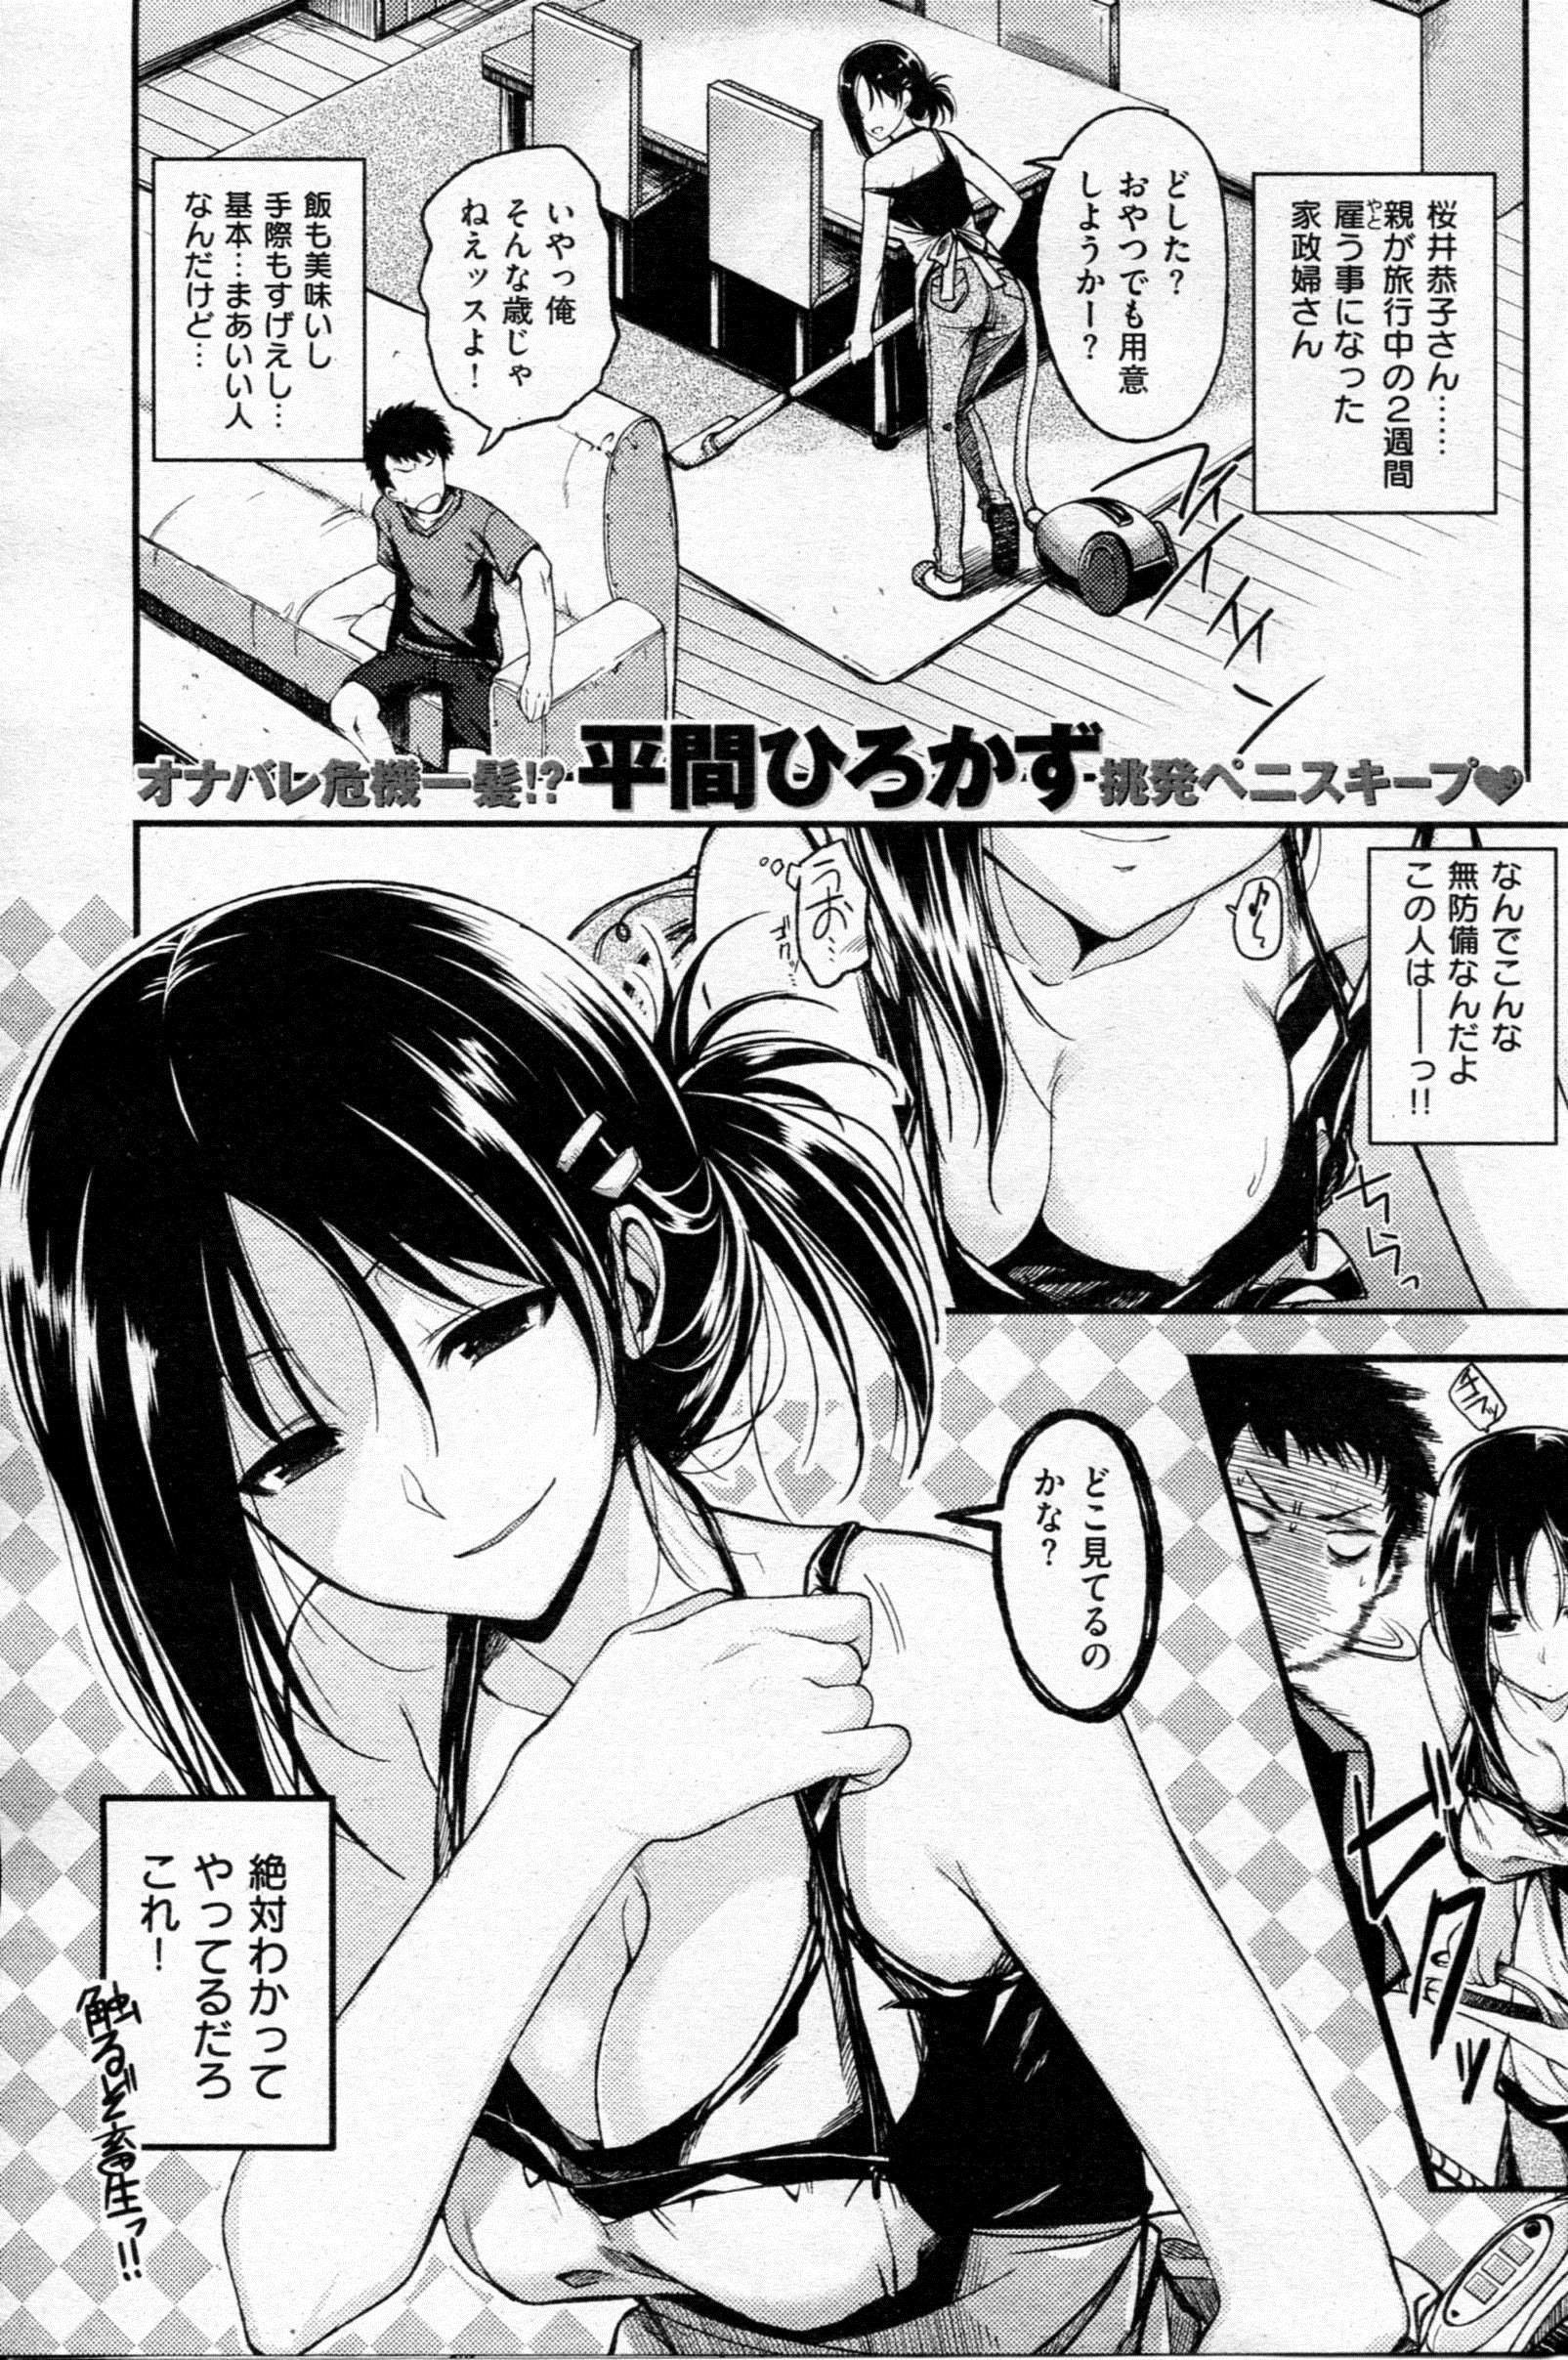 Fuuko no, bitch-CHAN to Shota, because our cum could you help Shota images wwww part15 [hands handjob, reverse rape, women] 9